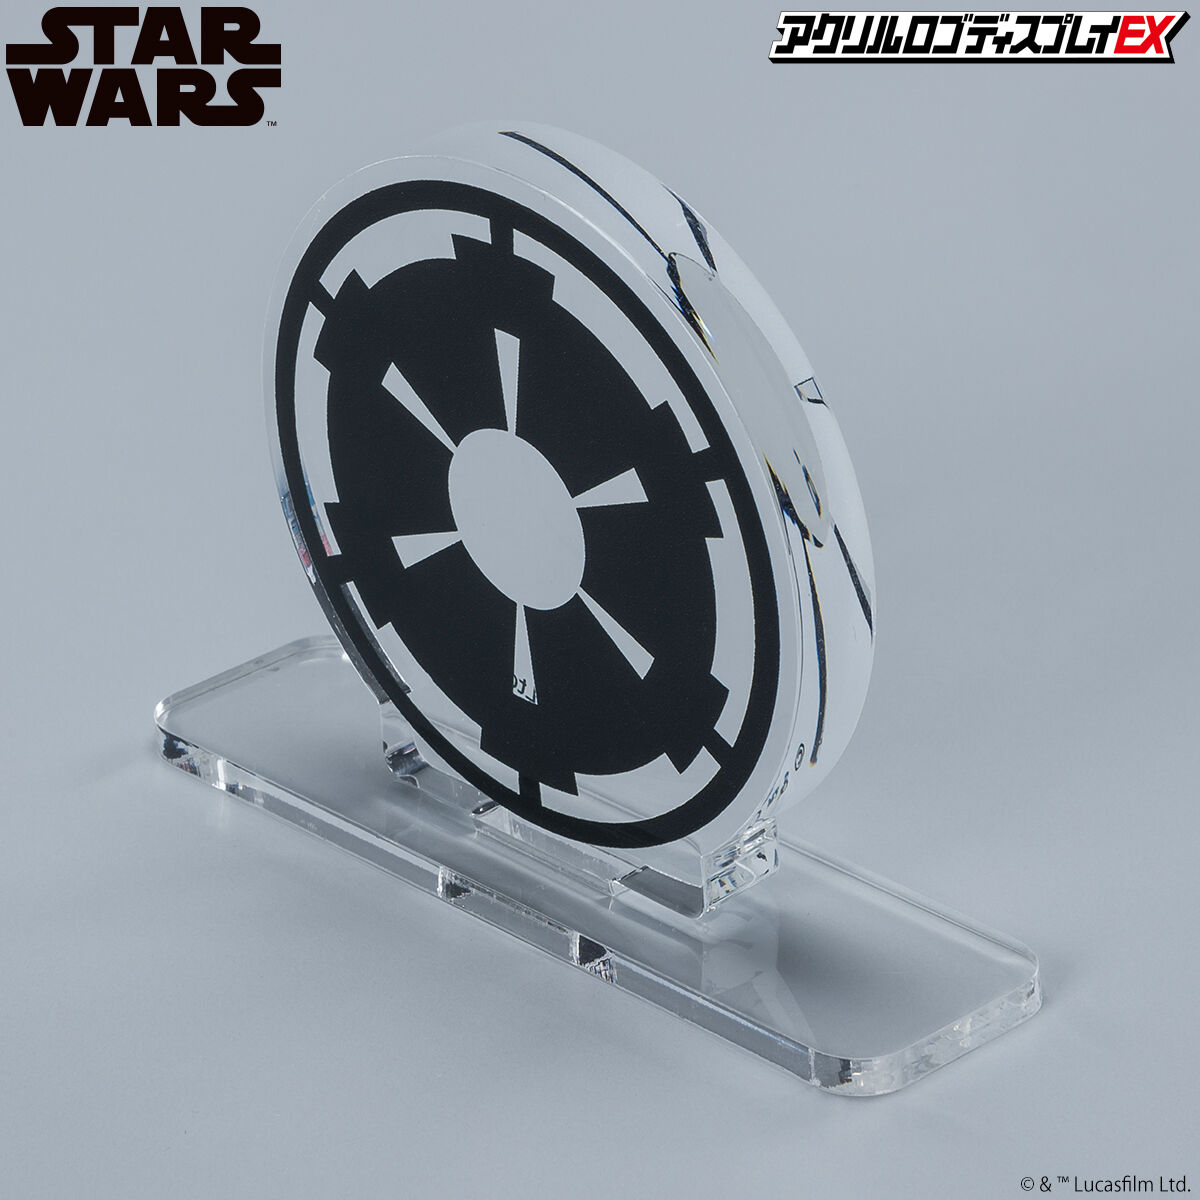 Acrylic Logo Diplay EX-Star Wars:Imperial Military